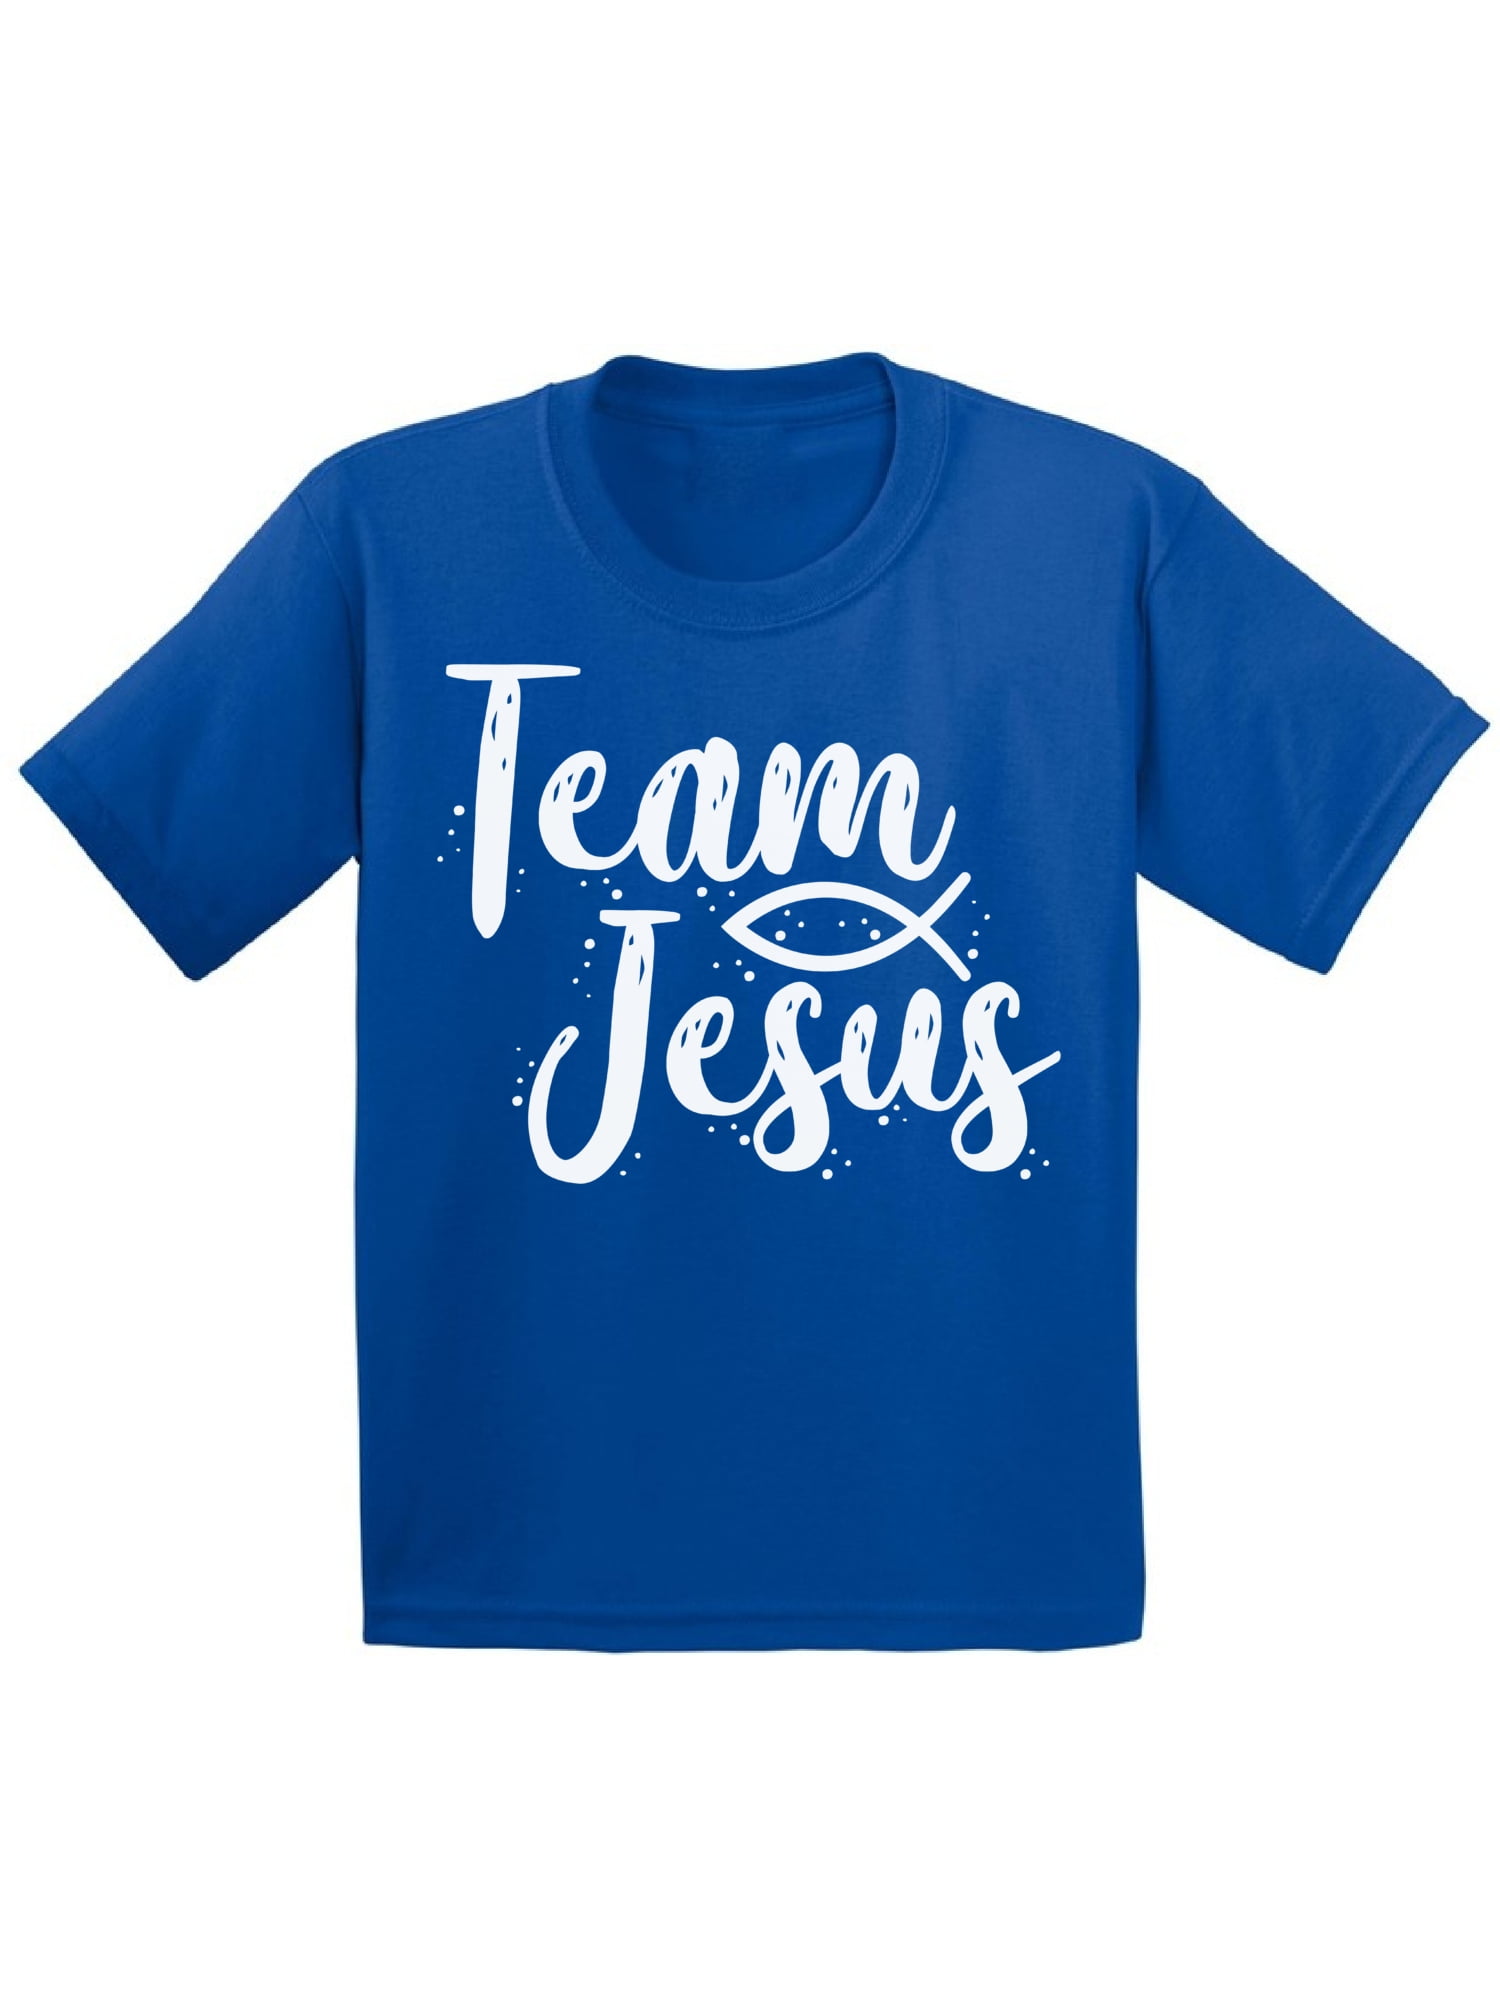 Awkward Styles Team Jesus Toddler T-Shirt for Kids Christian T-Shirt ...